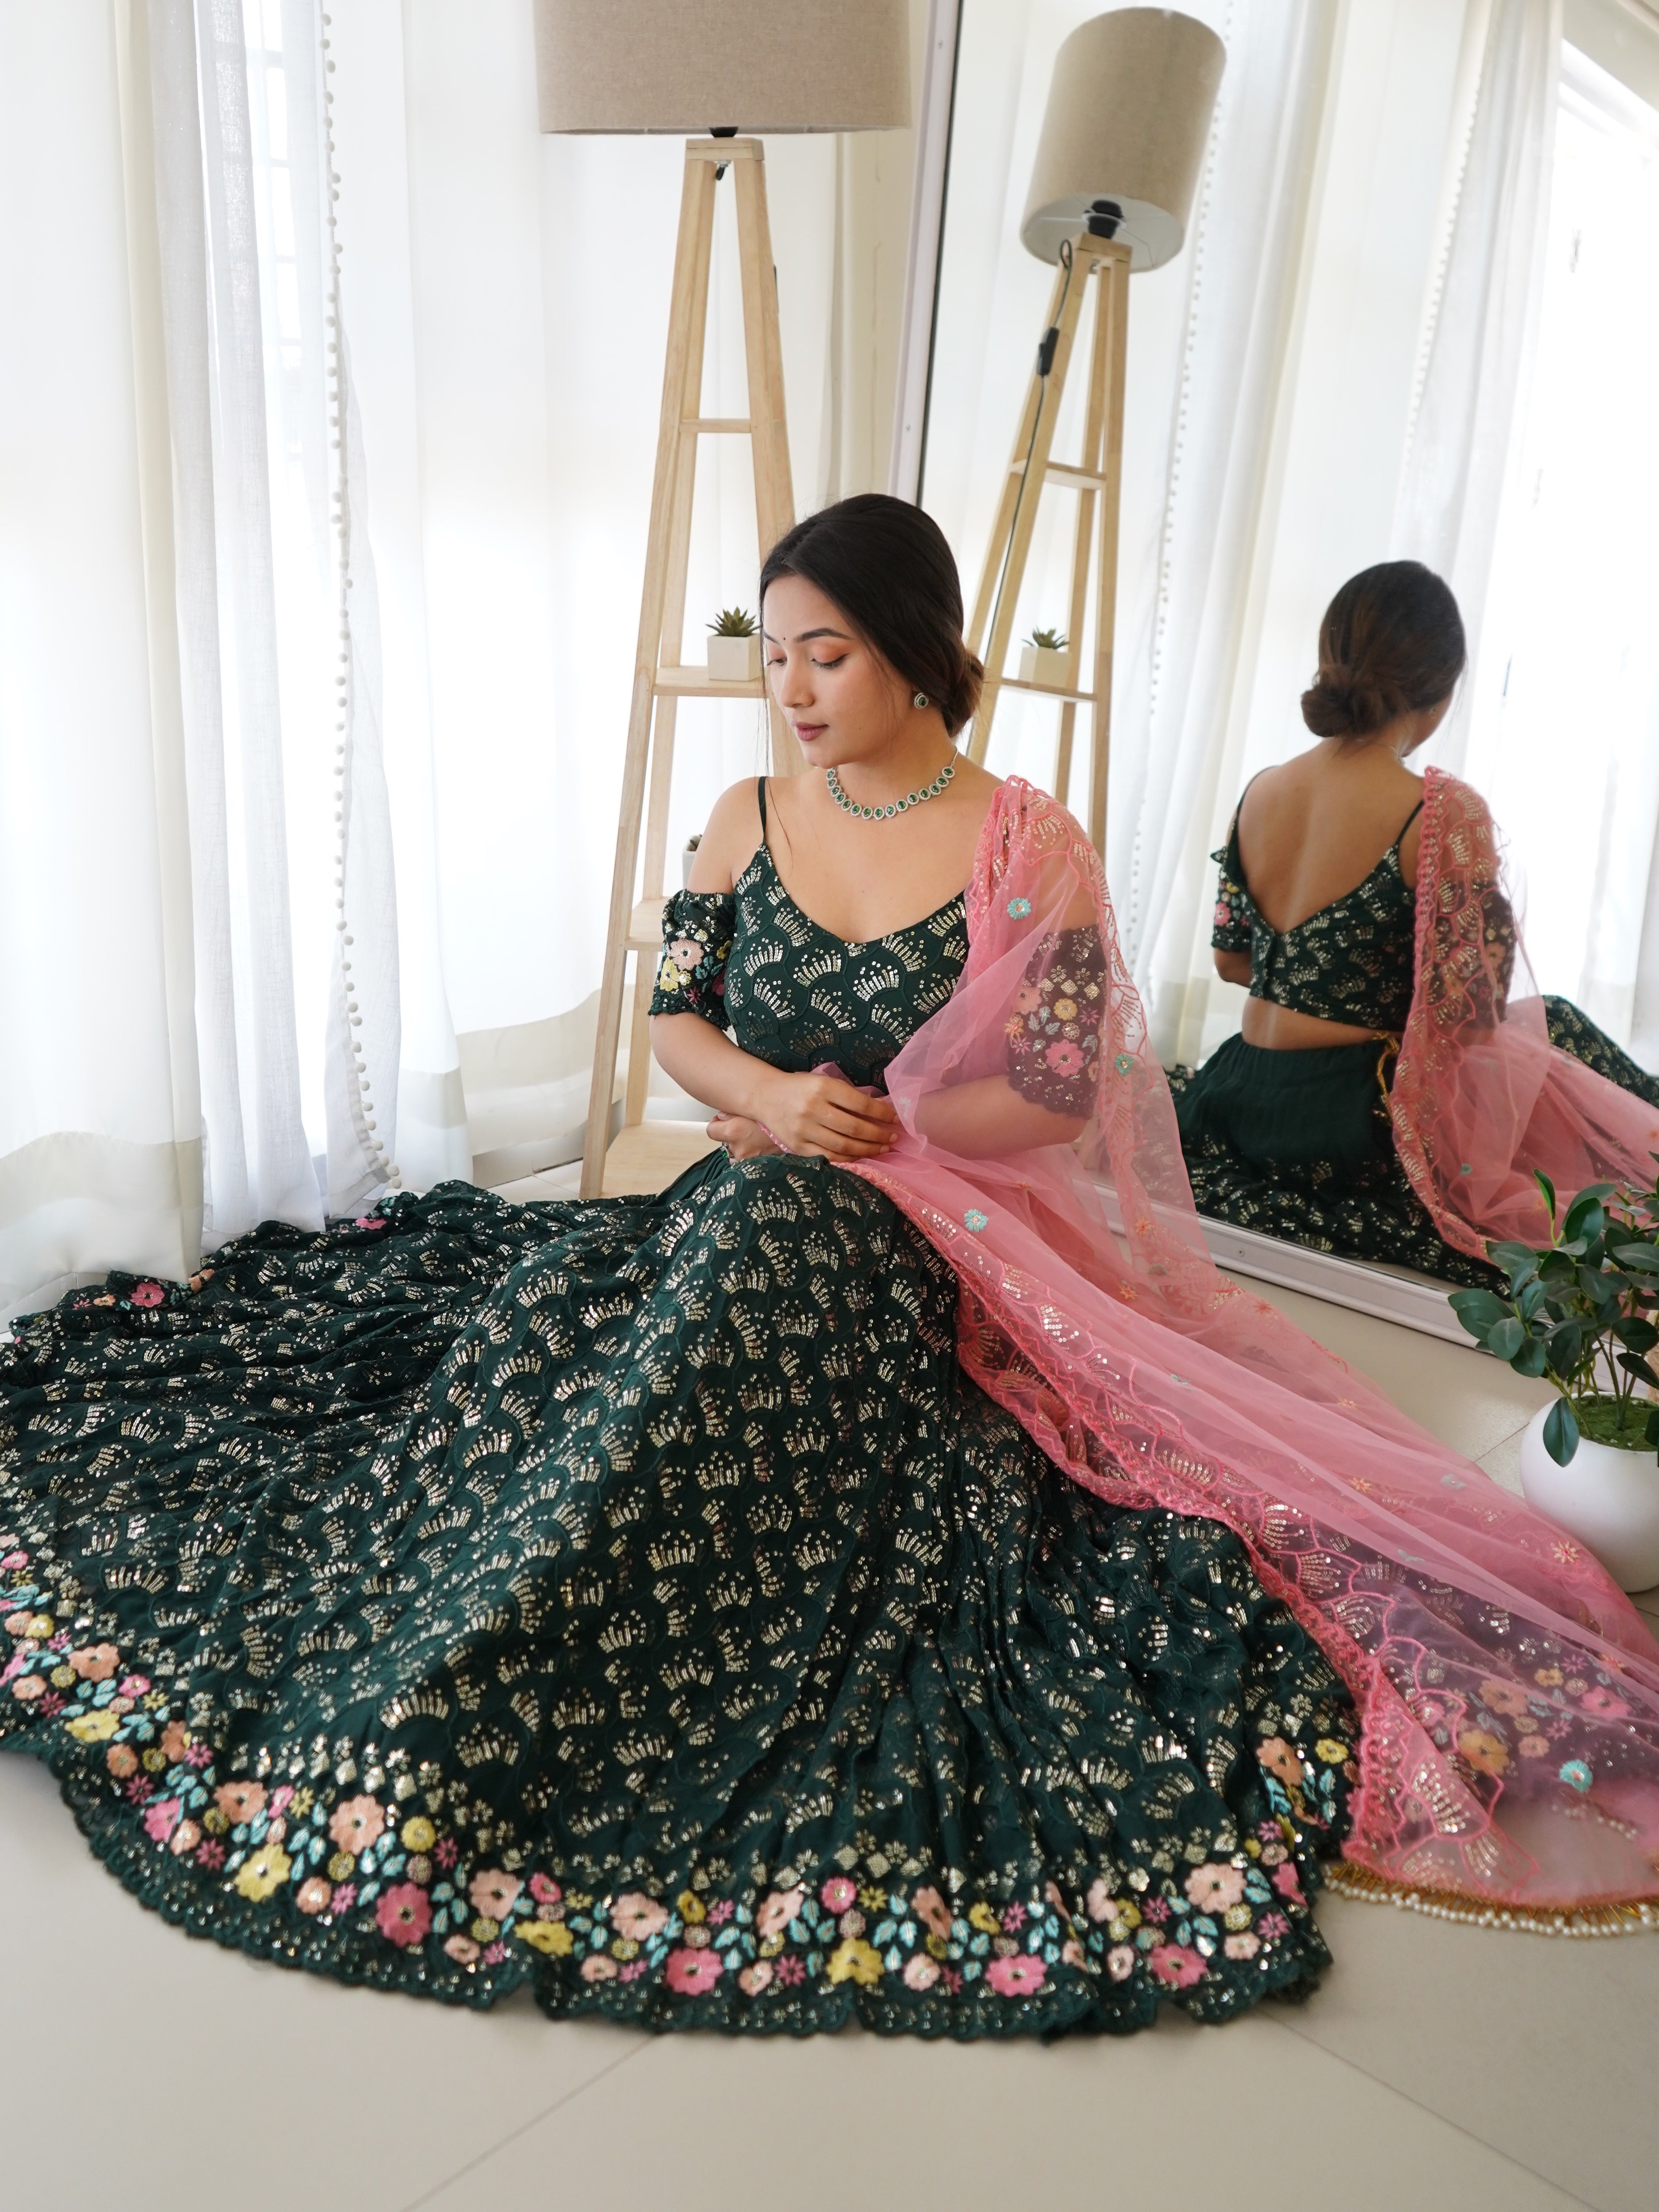 Beautiful Bridal Red Heavy Embroidered Designer Lehenga, कढ़ाई वाला दुल्हन  का लेहंगा - Prathmesh Enterprises, Mumbai | ID: 26136045073